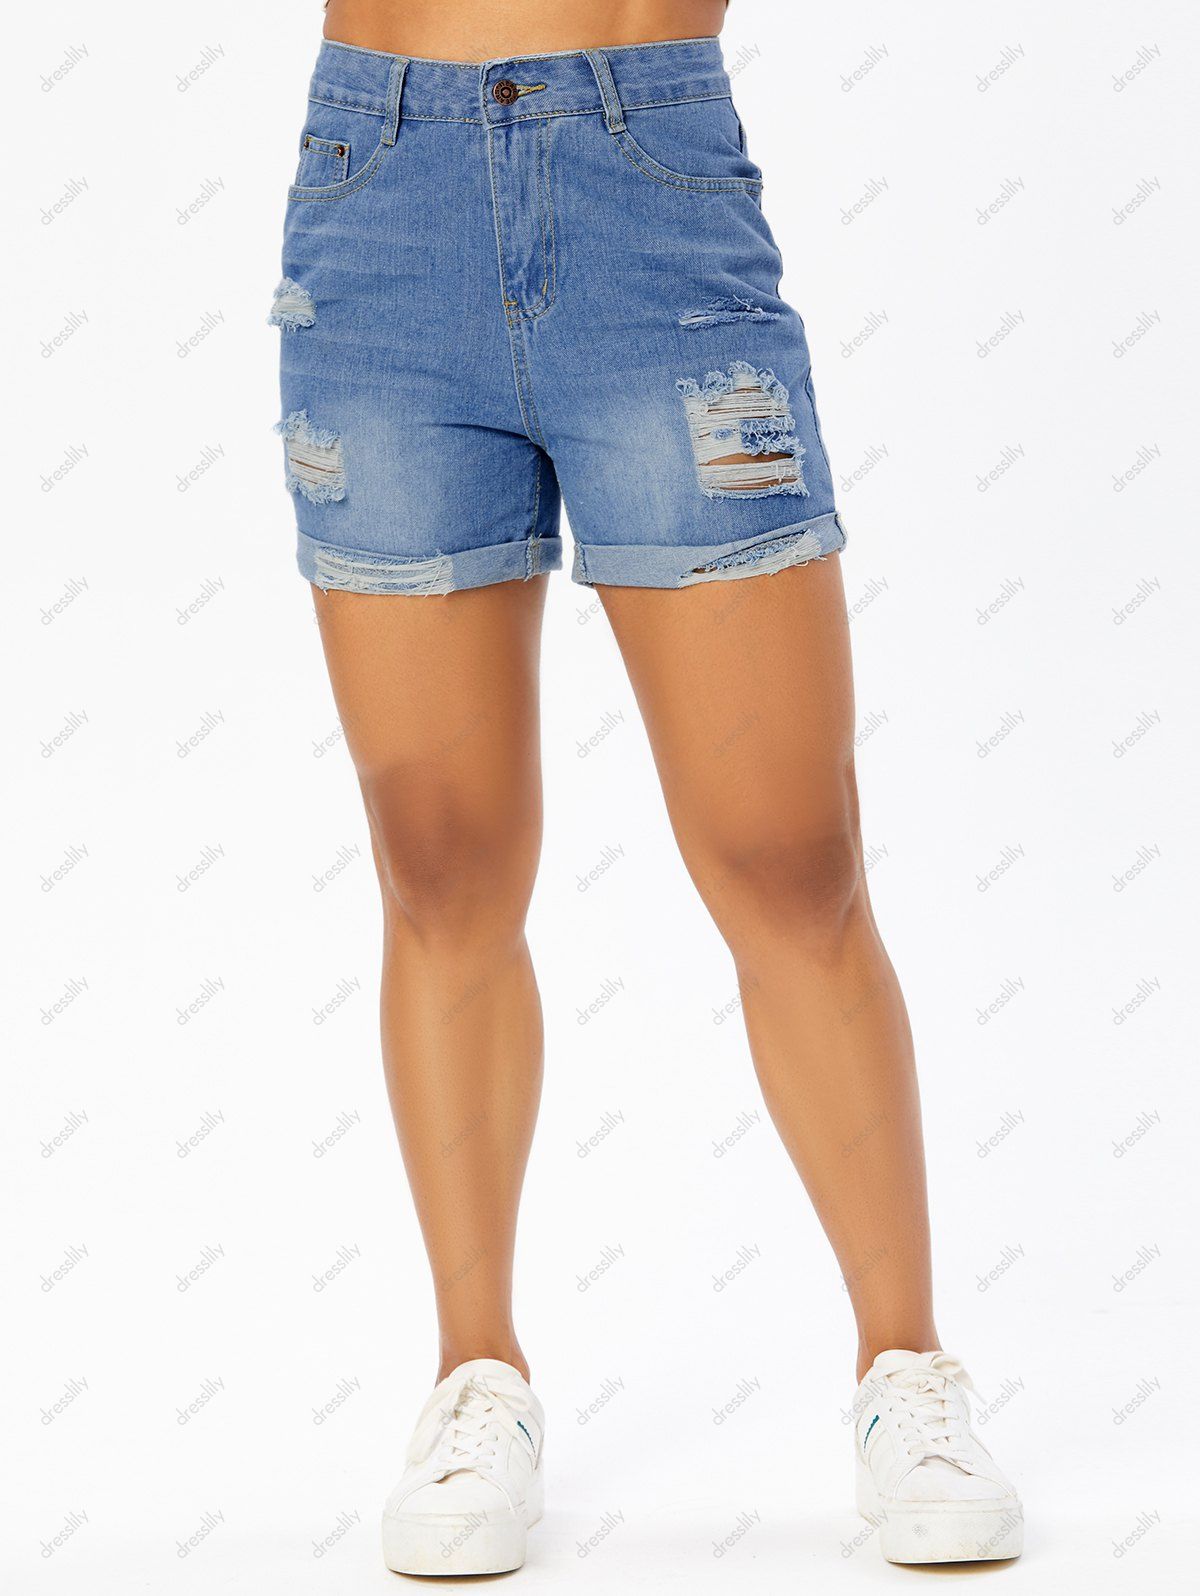 Ripped Denim Shorts Zipper Fly Shorts Pockets Distressed Summer Trendy Shorts 